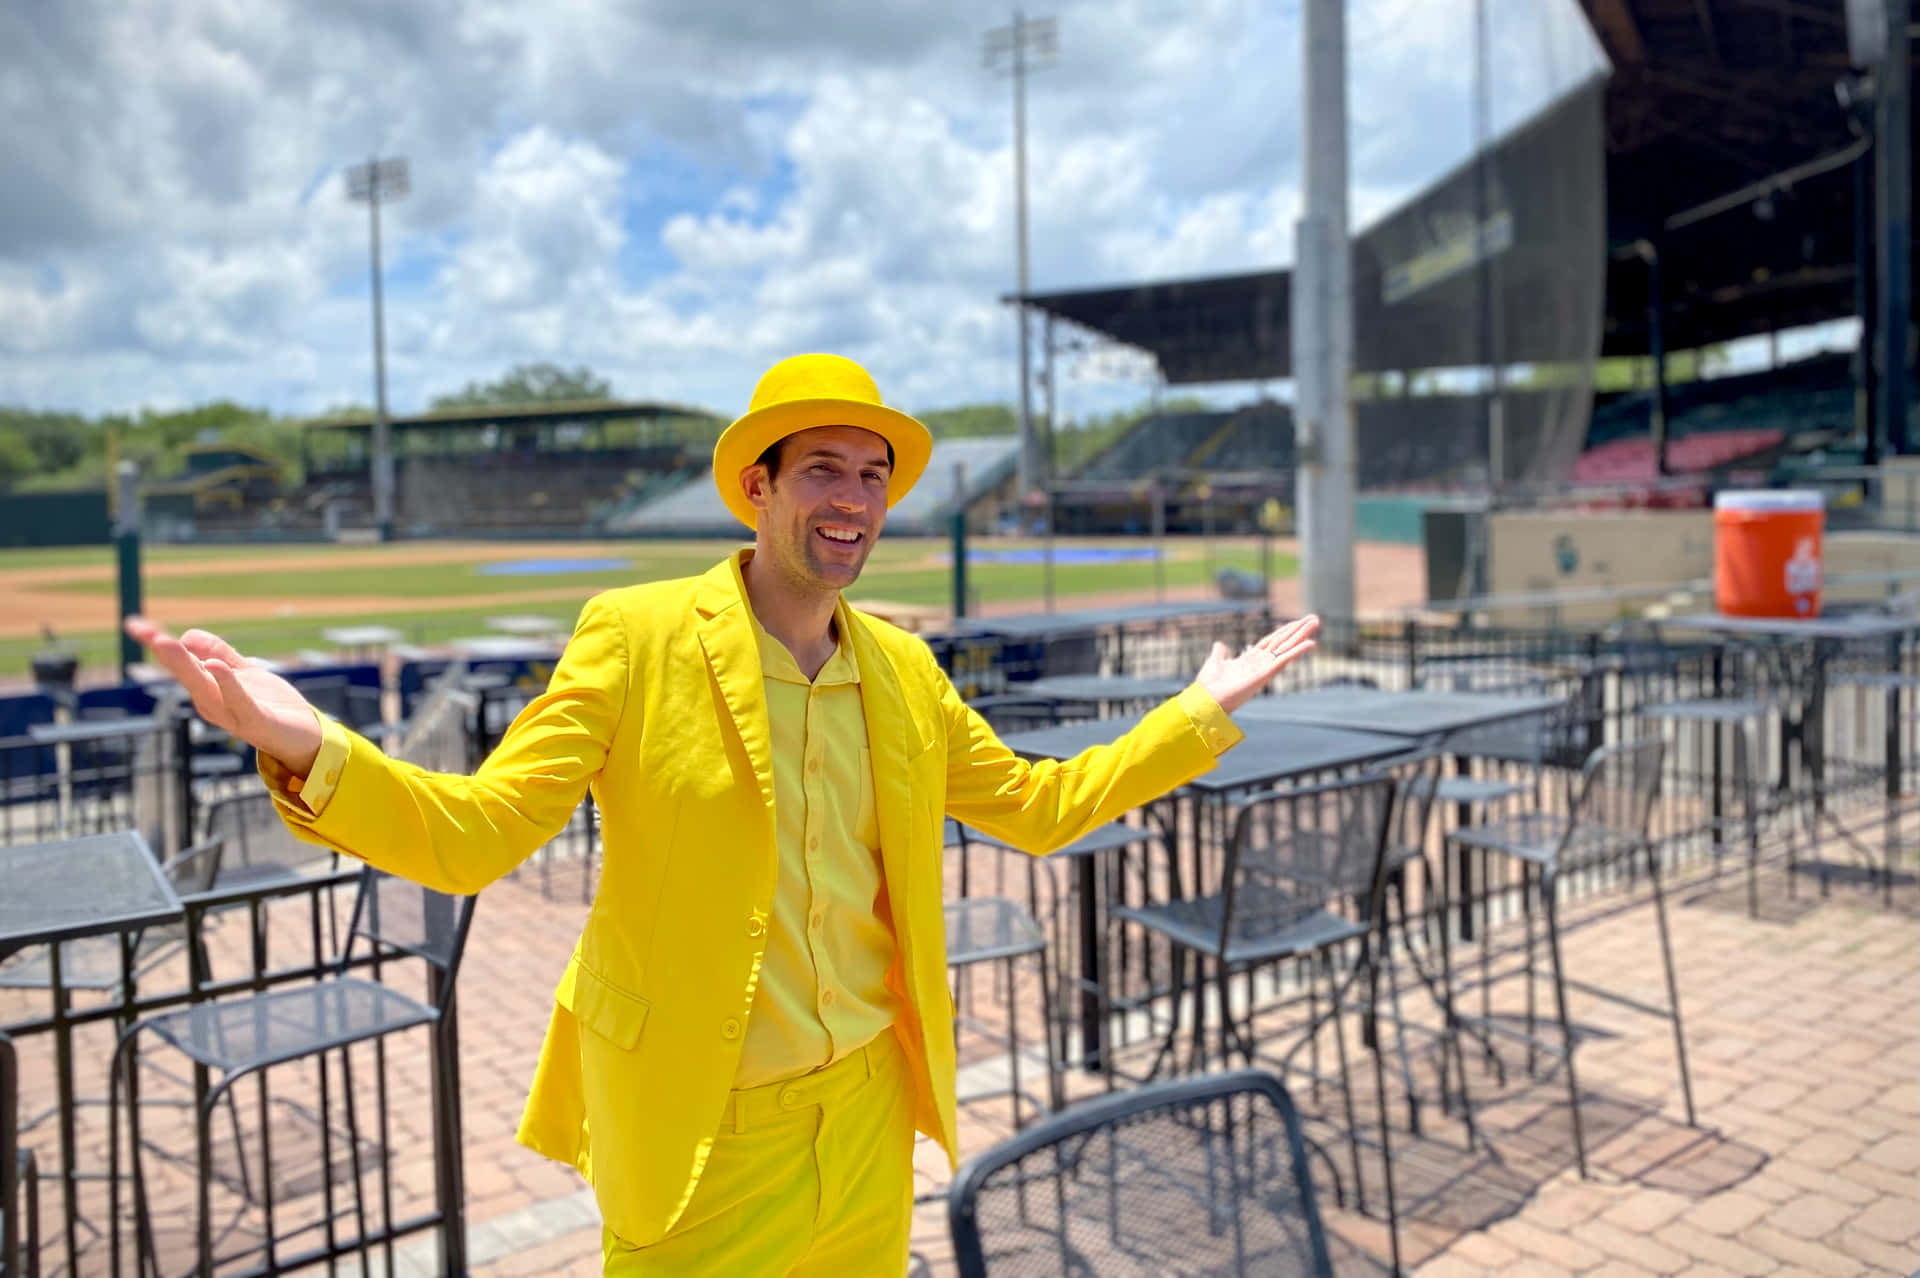 Manin Yellow Suitat Baseball Stadium Wallpaper